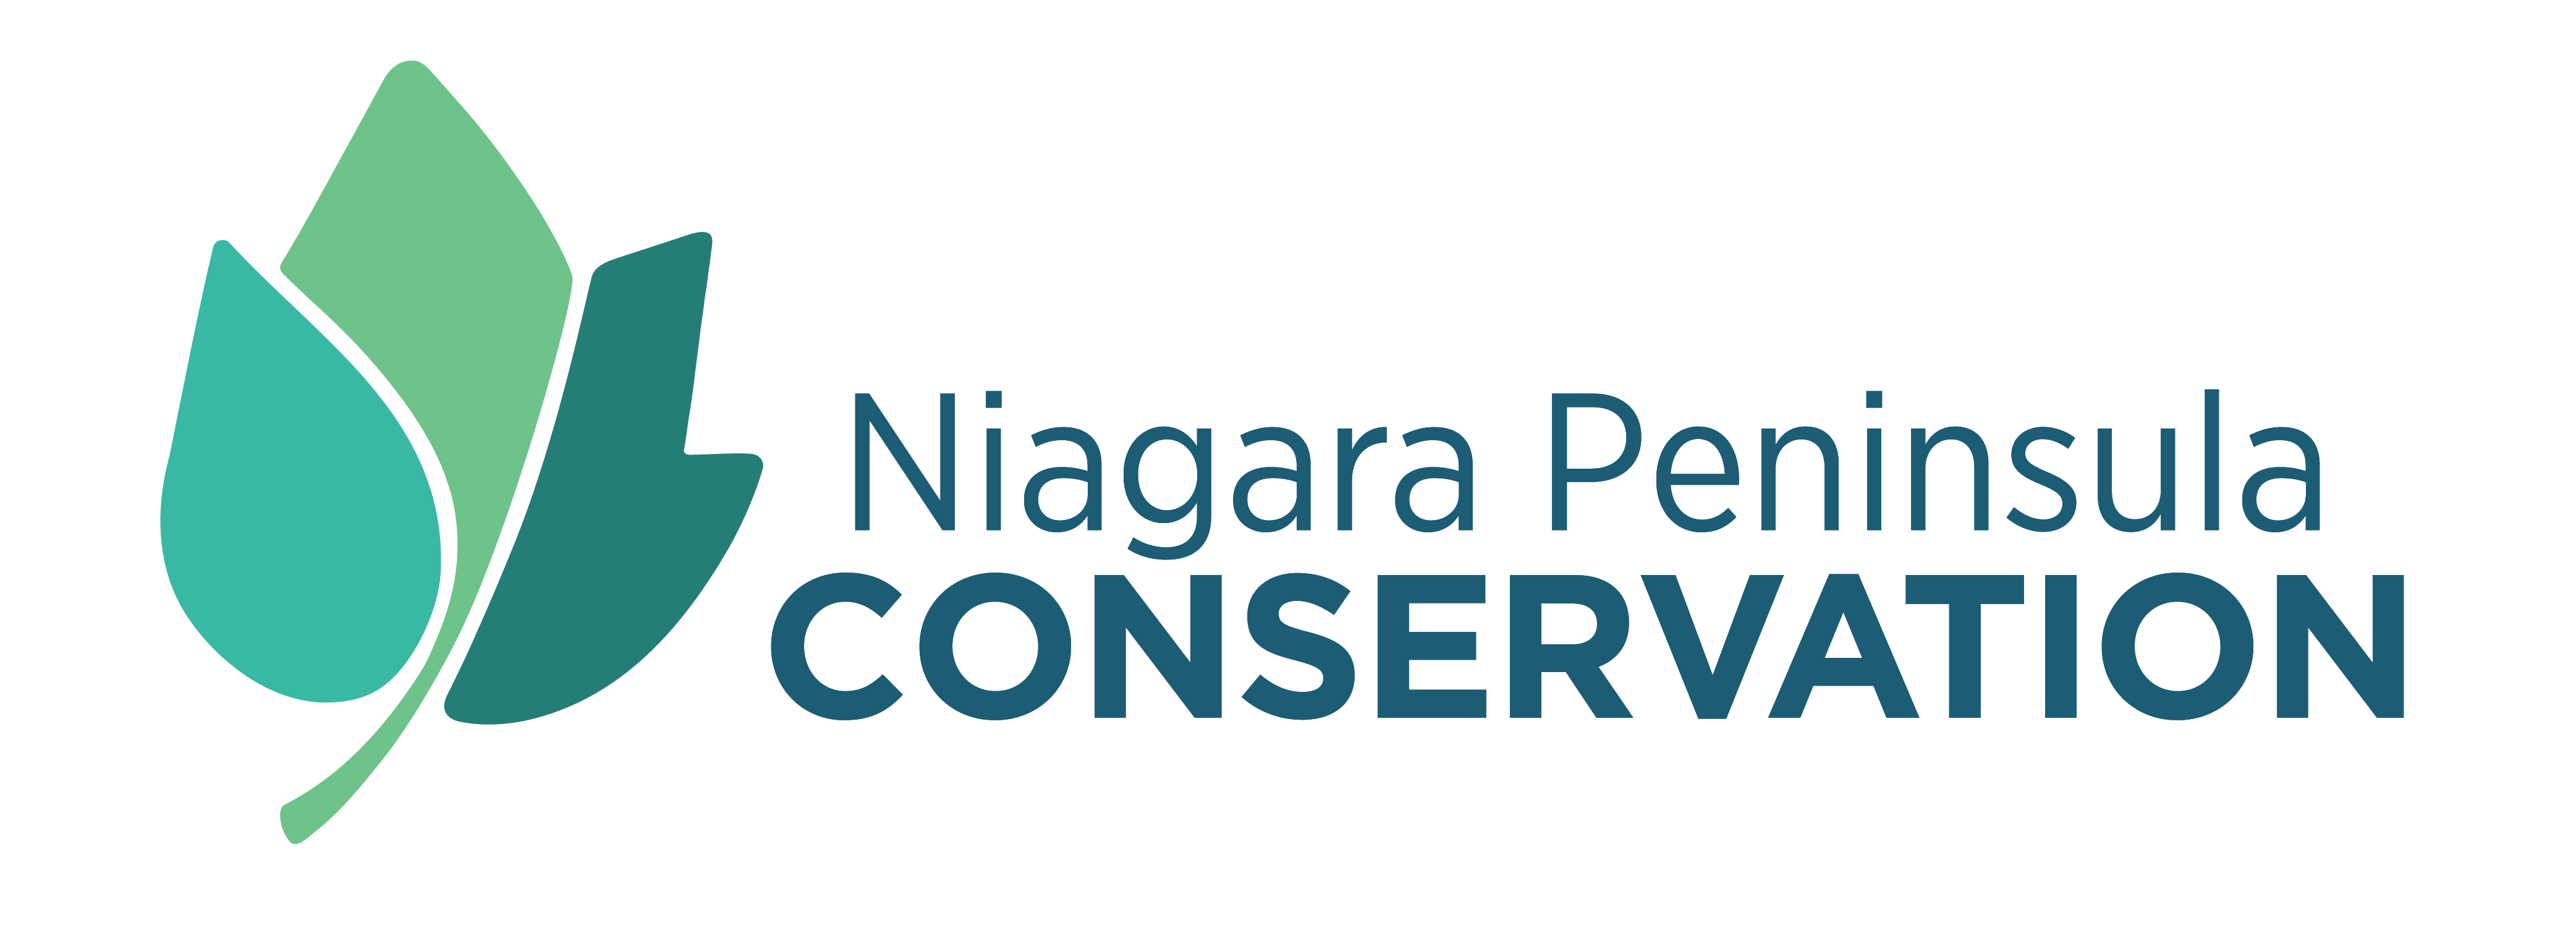 Niagara Peninsula Conservation Authority_logo